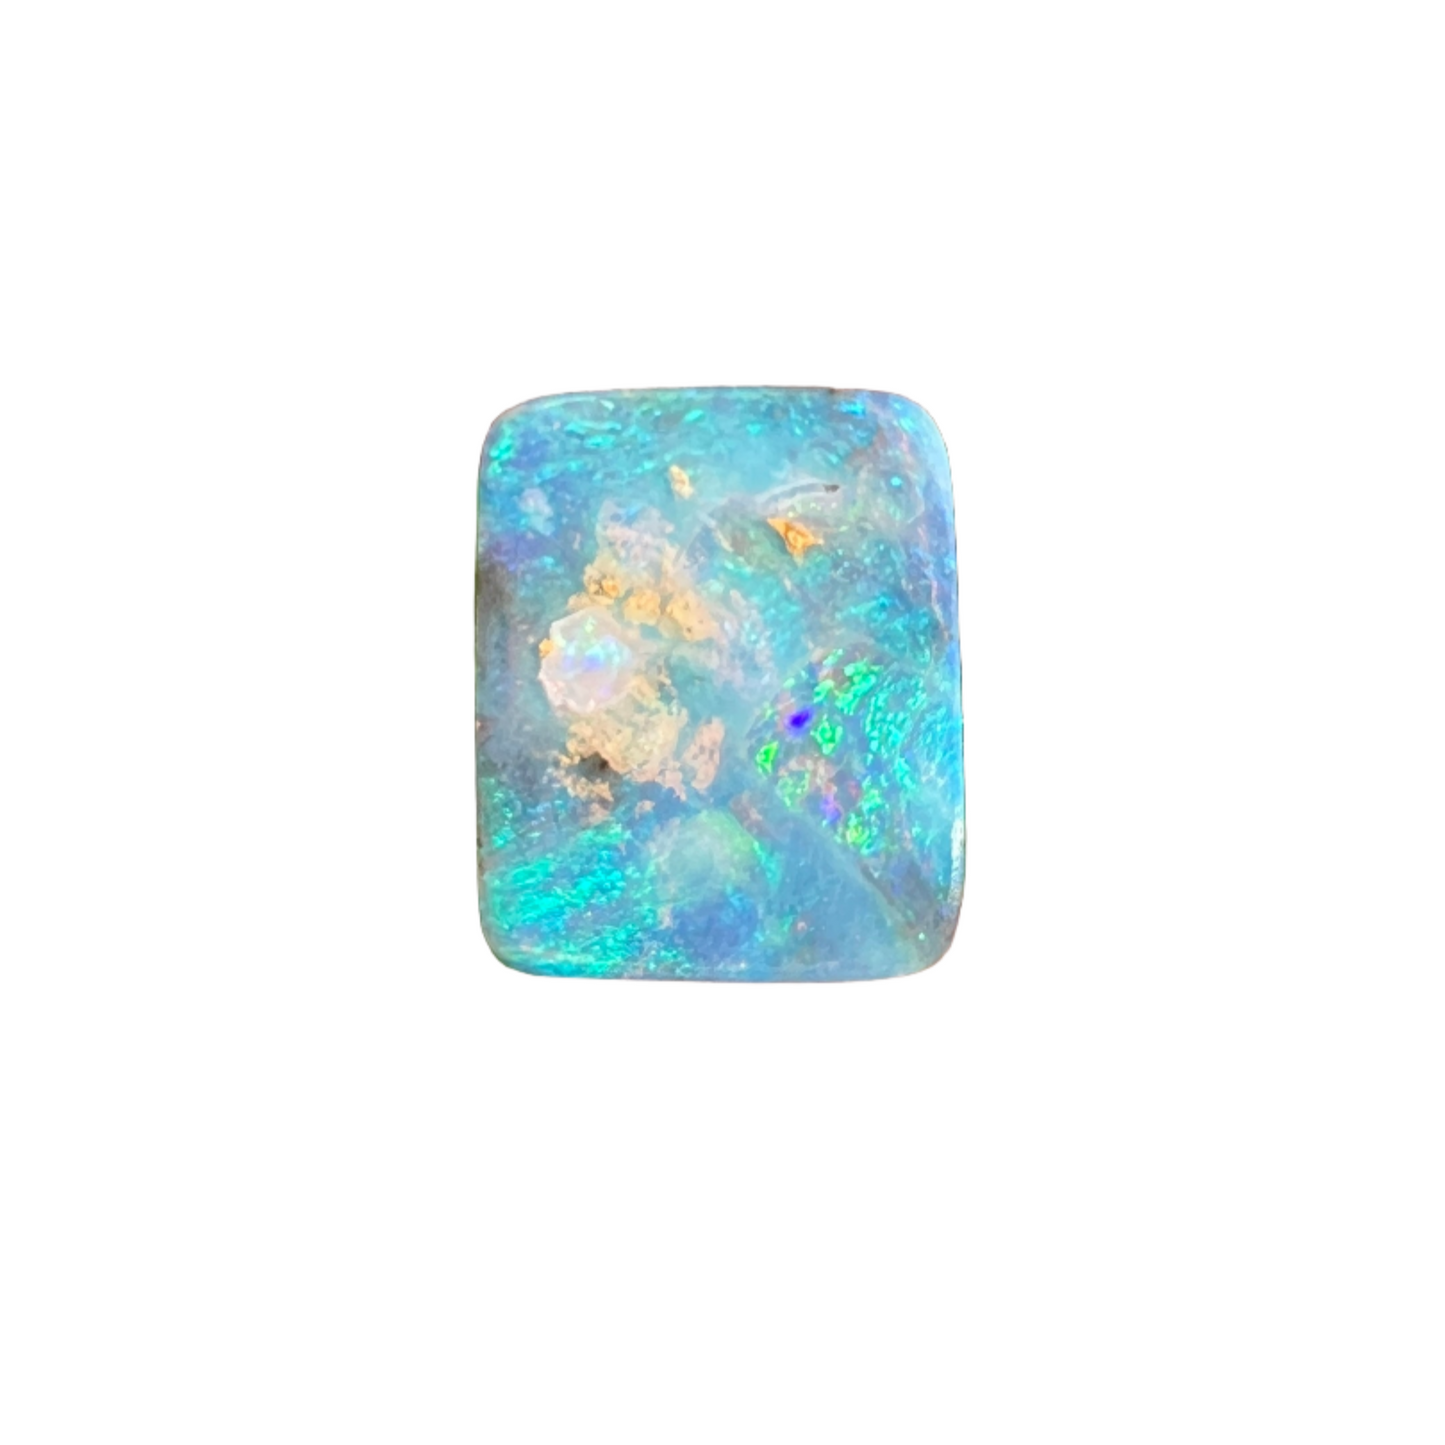 3.09 Ct small boulder opal